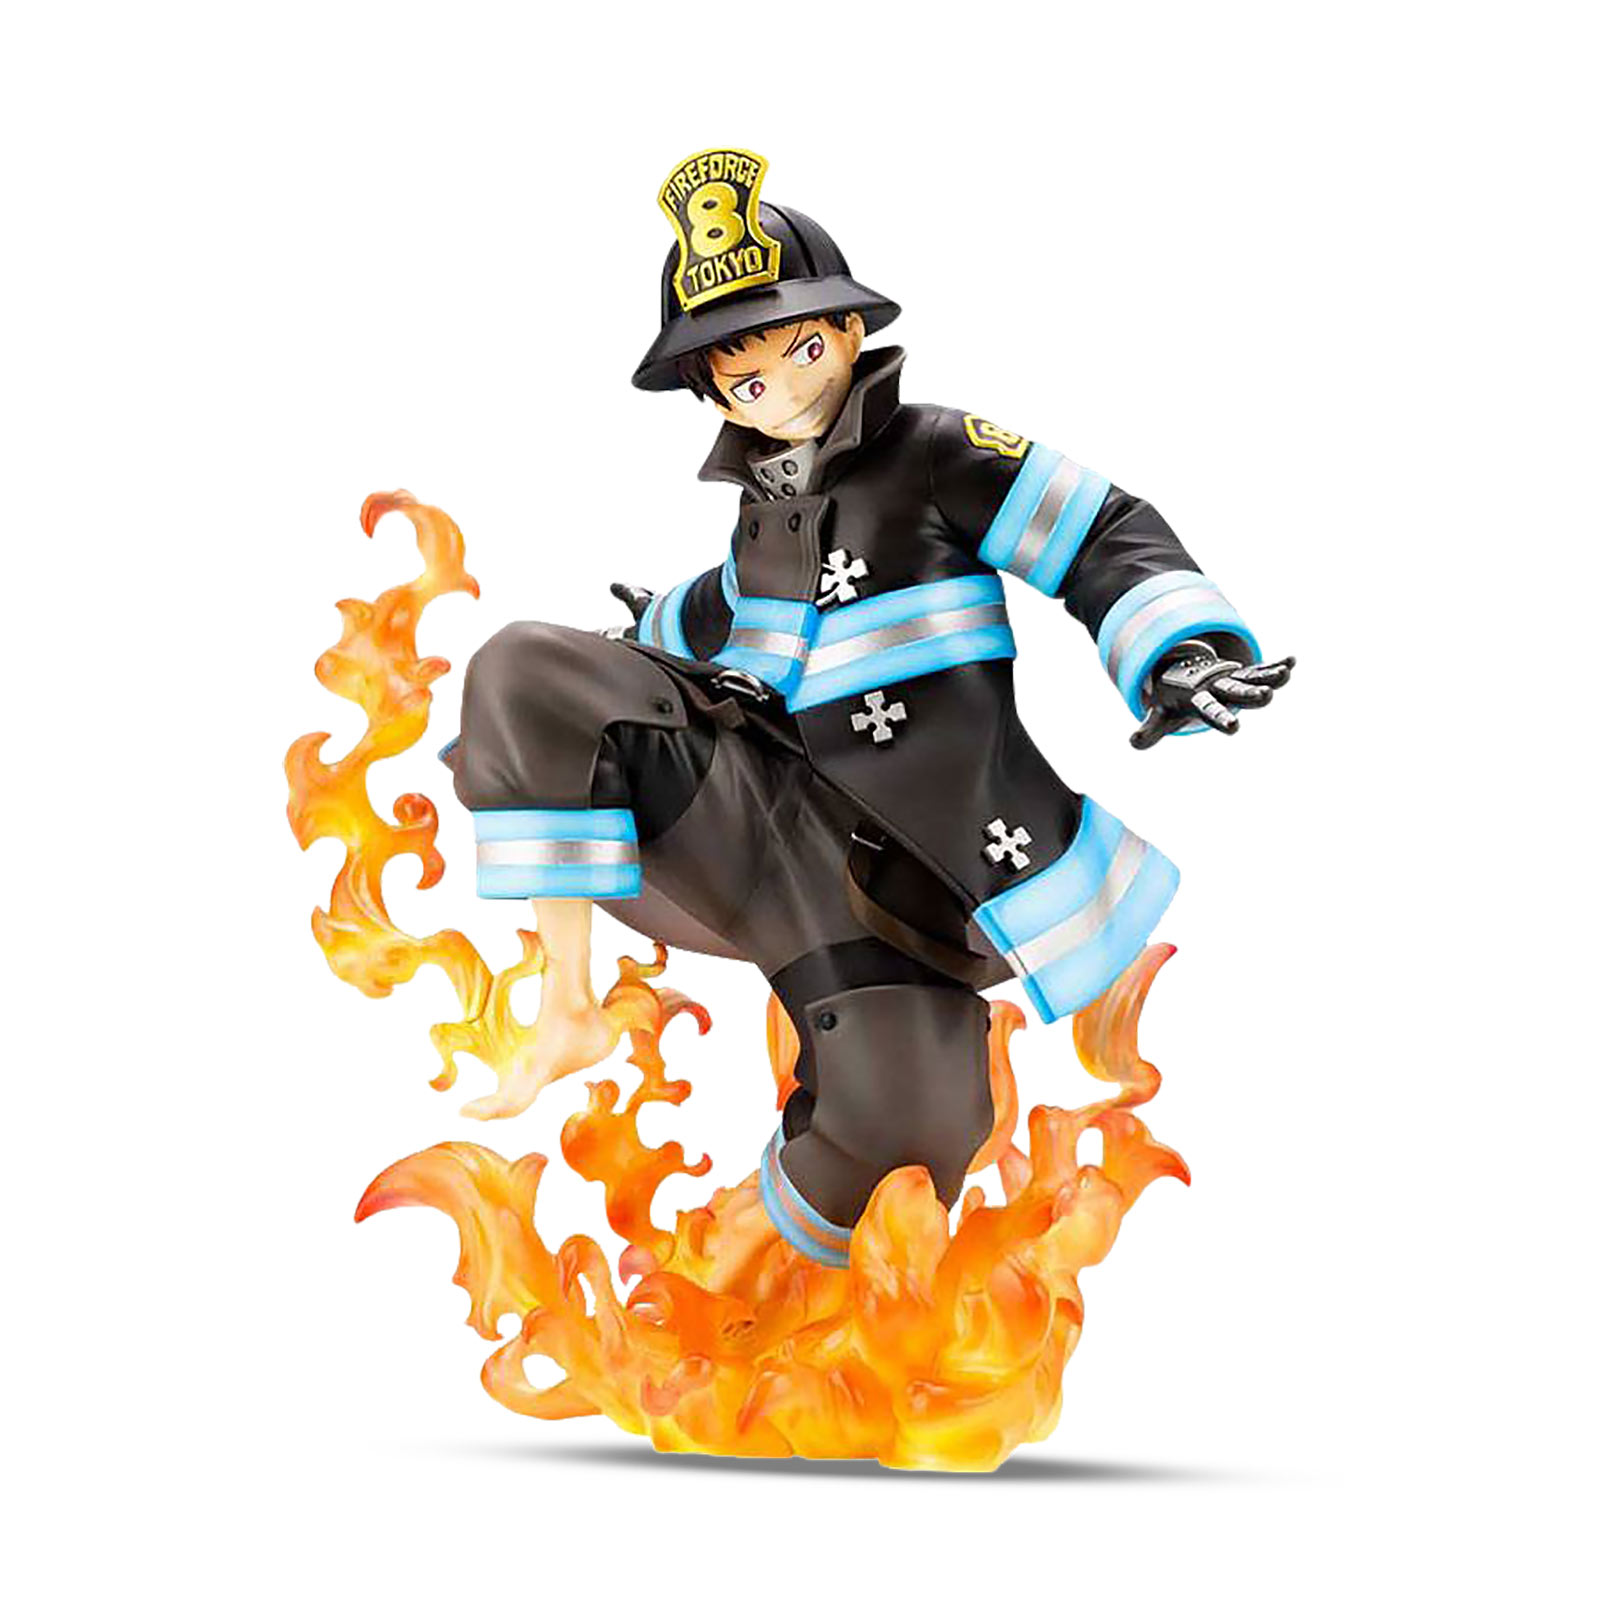 Fire Force - Shinra Kusakabe Glow in the Dark ArtFX+ Figurine Edition Bonus